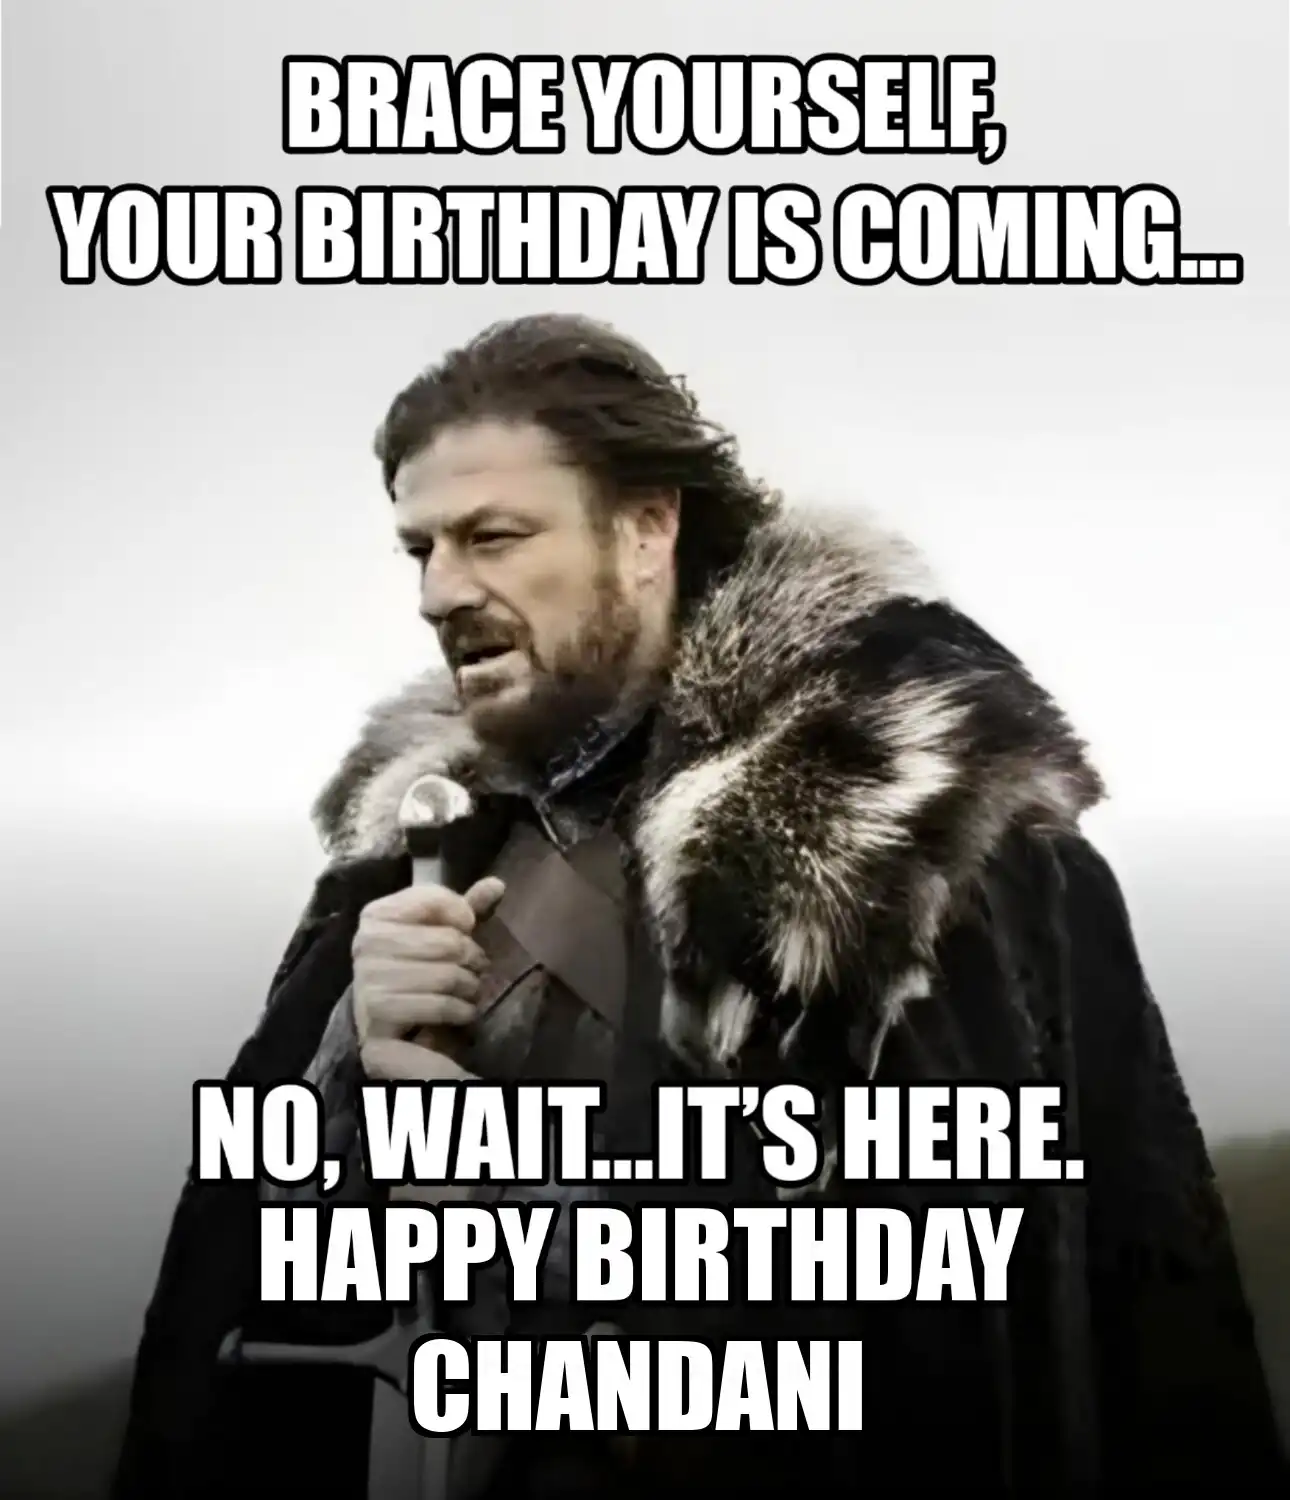 Happy Birthday Chandani Brace Yourself Your Birthday Is Coming Meme